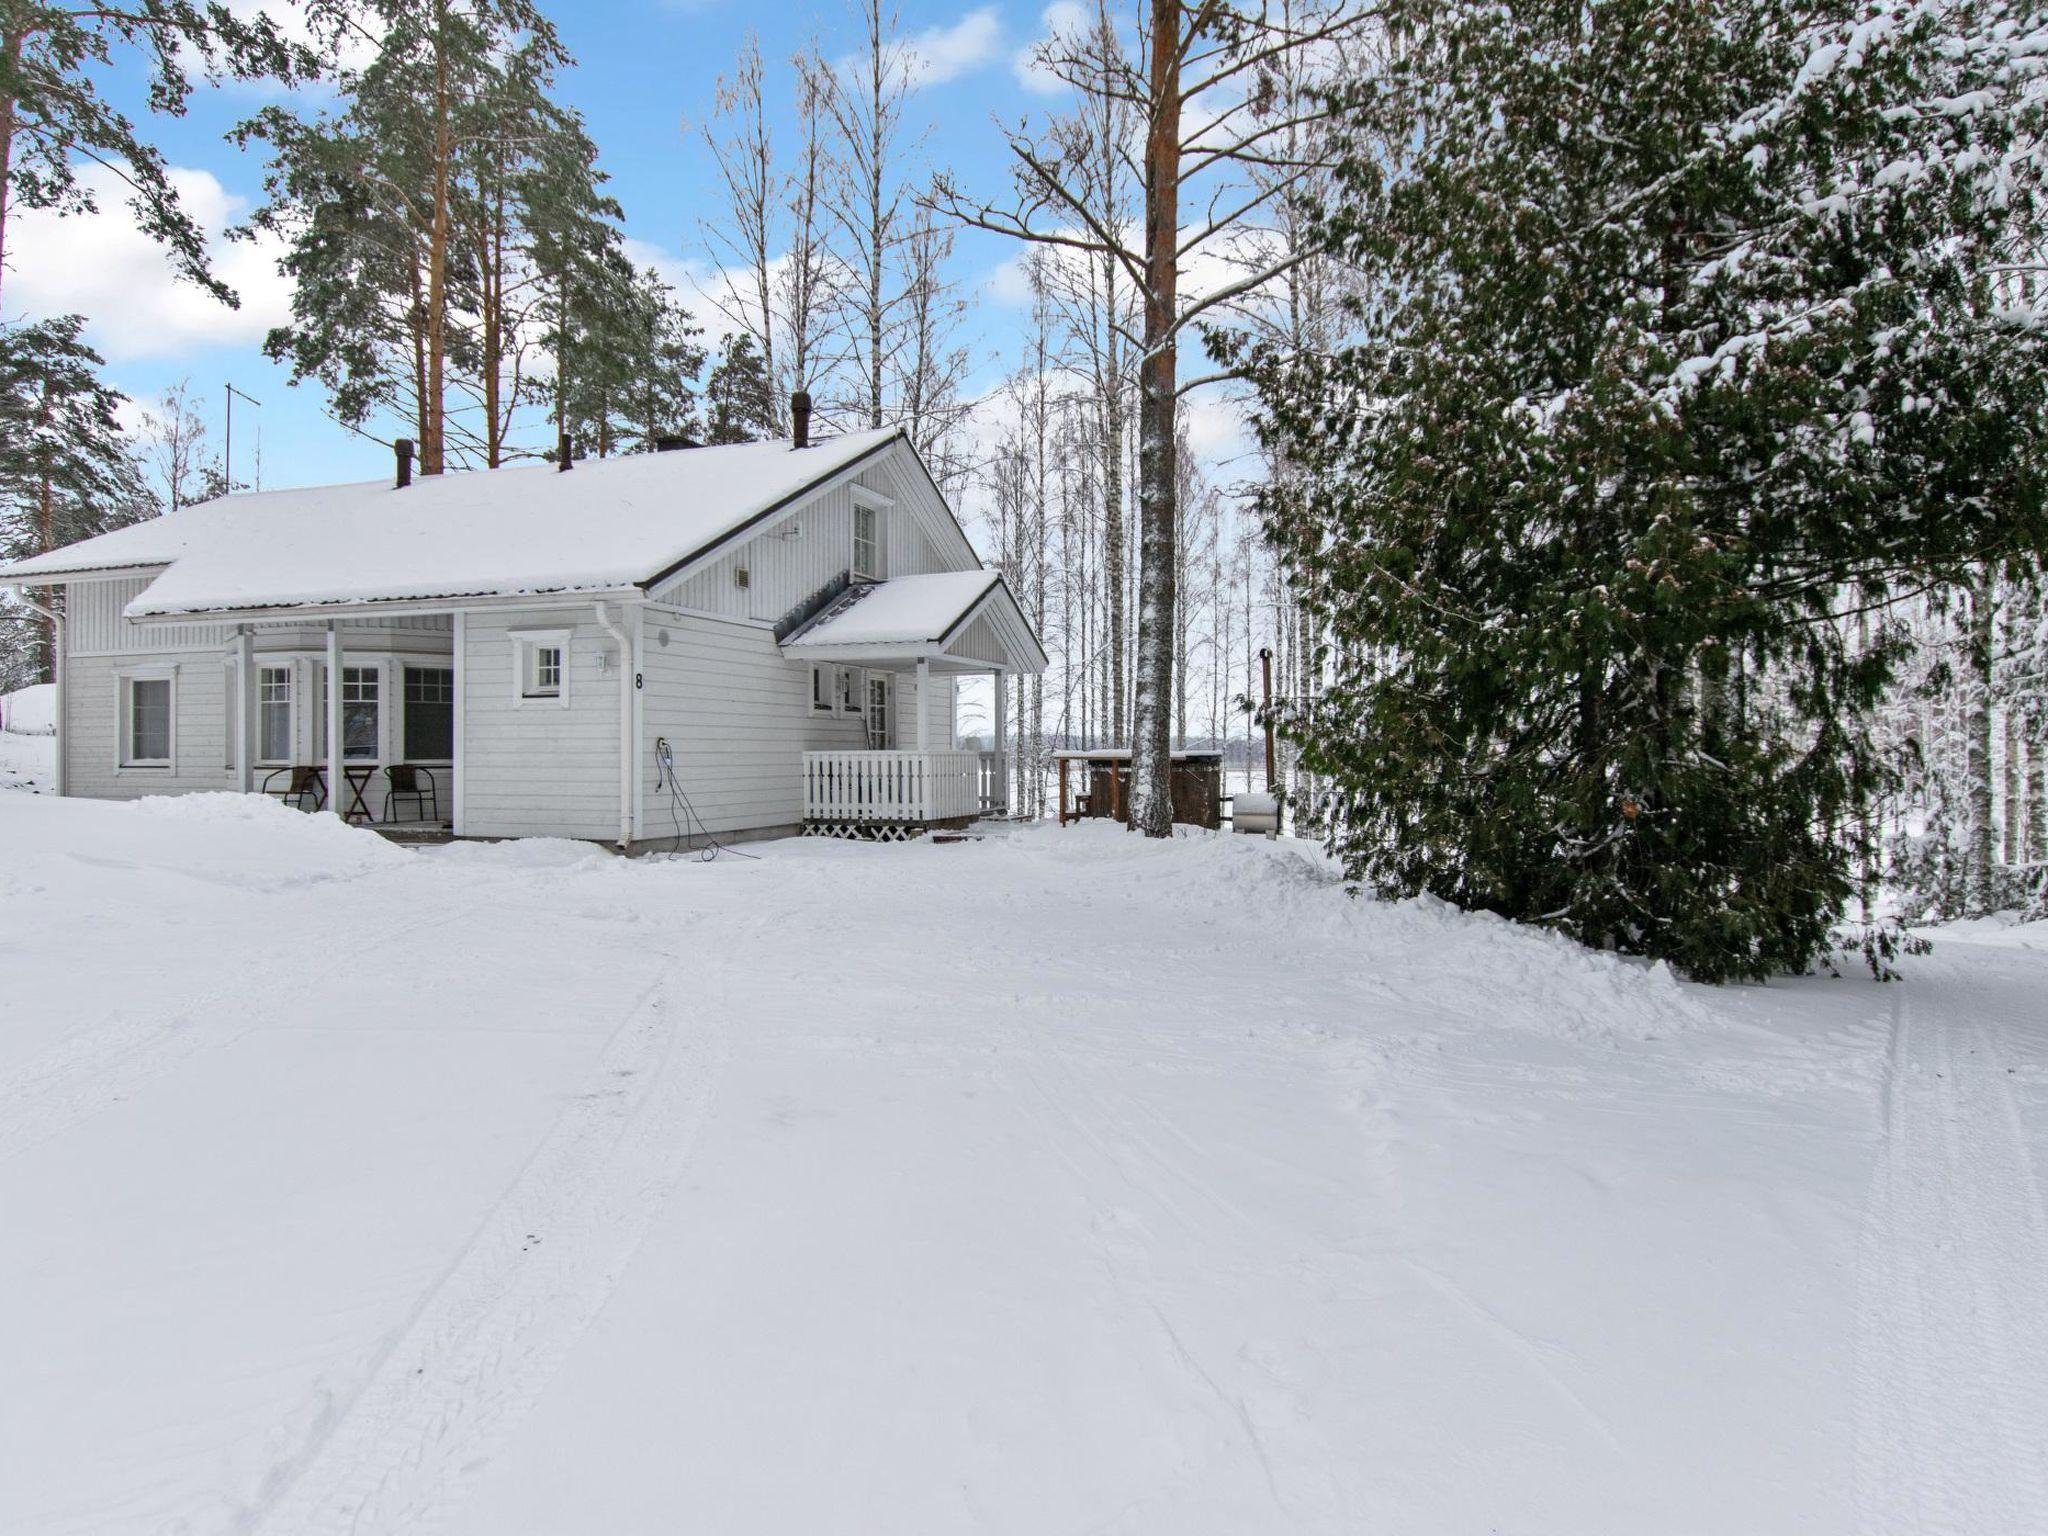 Photo 27 - 3 bedroom House in Savonlinna with sauna